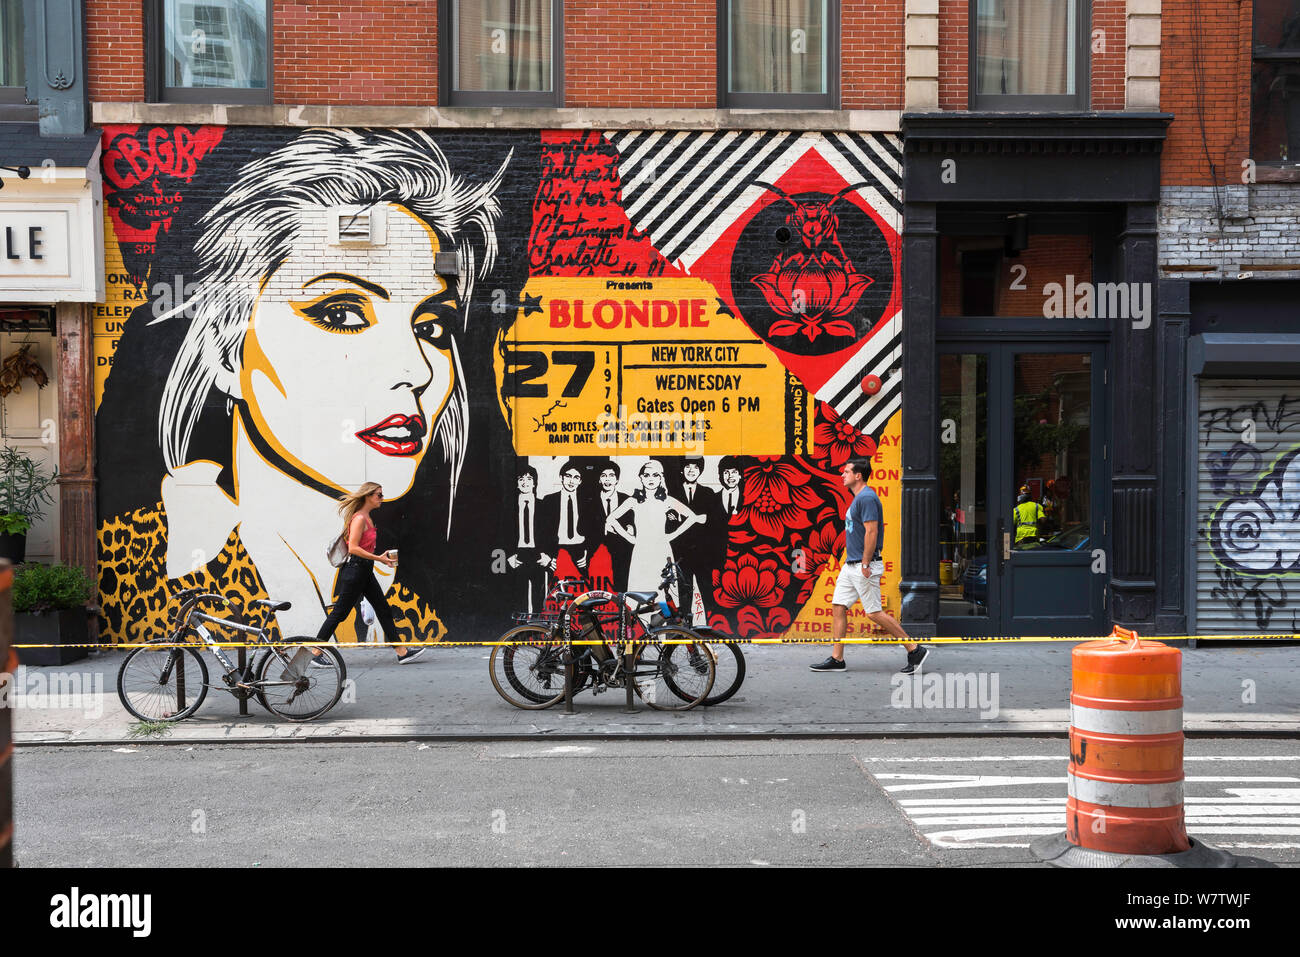 East Village New York, ammira in estate la Street art nell'East Village / Bowery che celebra la musica di Debbie Harry e Blondie, Manhattan, New York Foto Stock